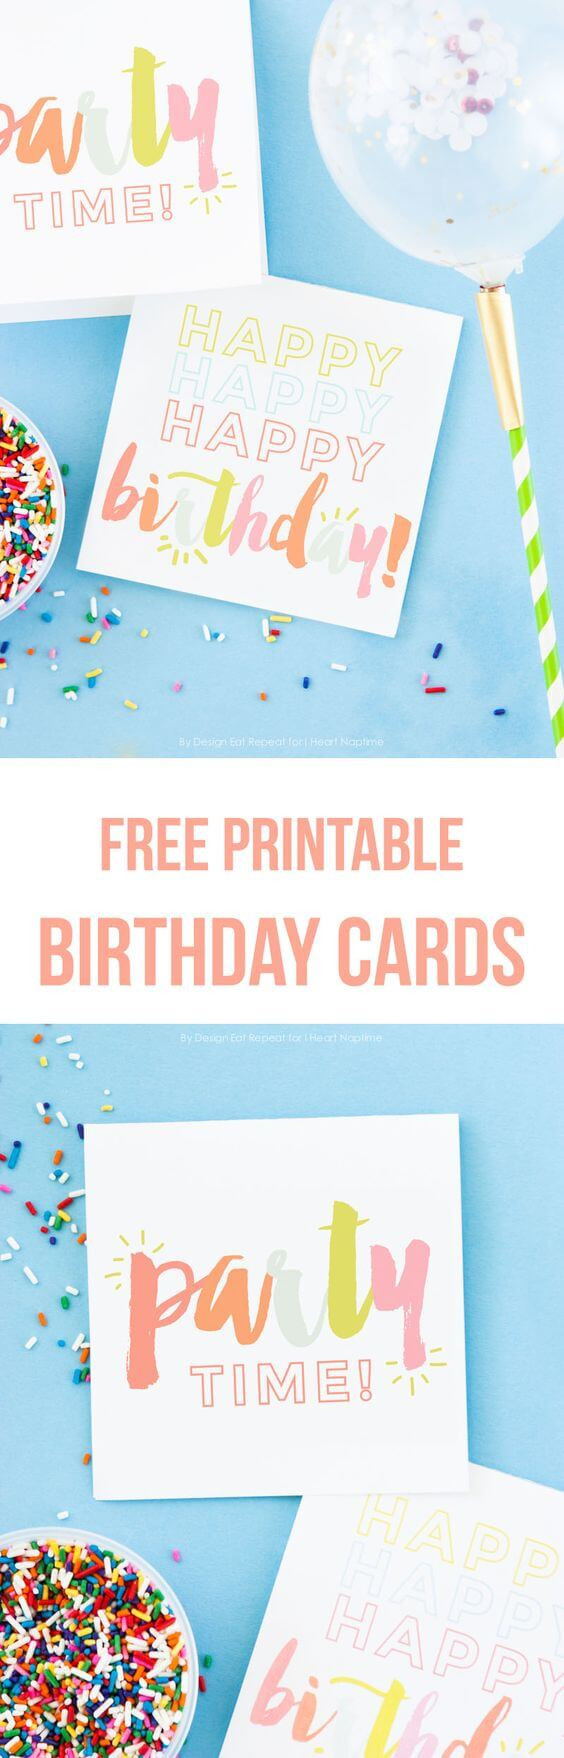 Birthday Cards Printable
 Adorable FREE printable birthday cards I Heart Naptime